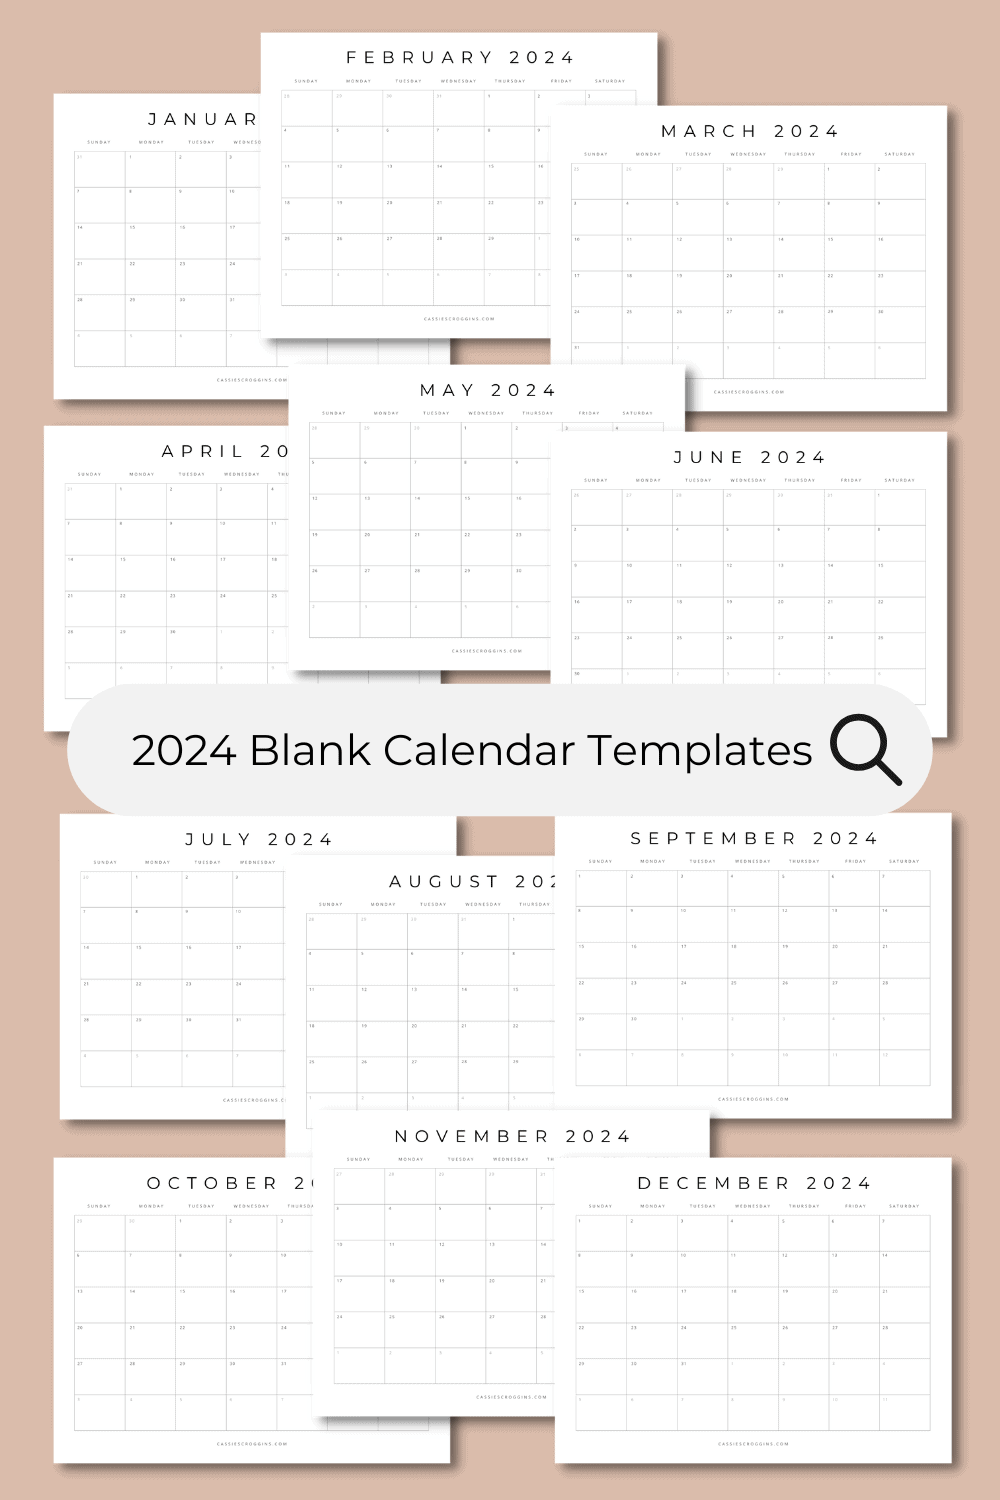 Free Printable 2024 Blank Calendar Templates (All 12 Months) within Free Printable Calendar 2024 No Ads